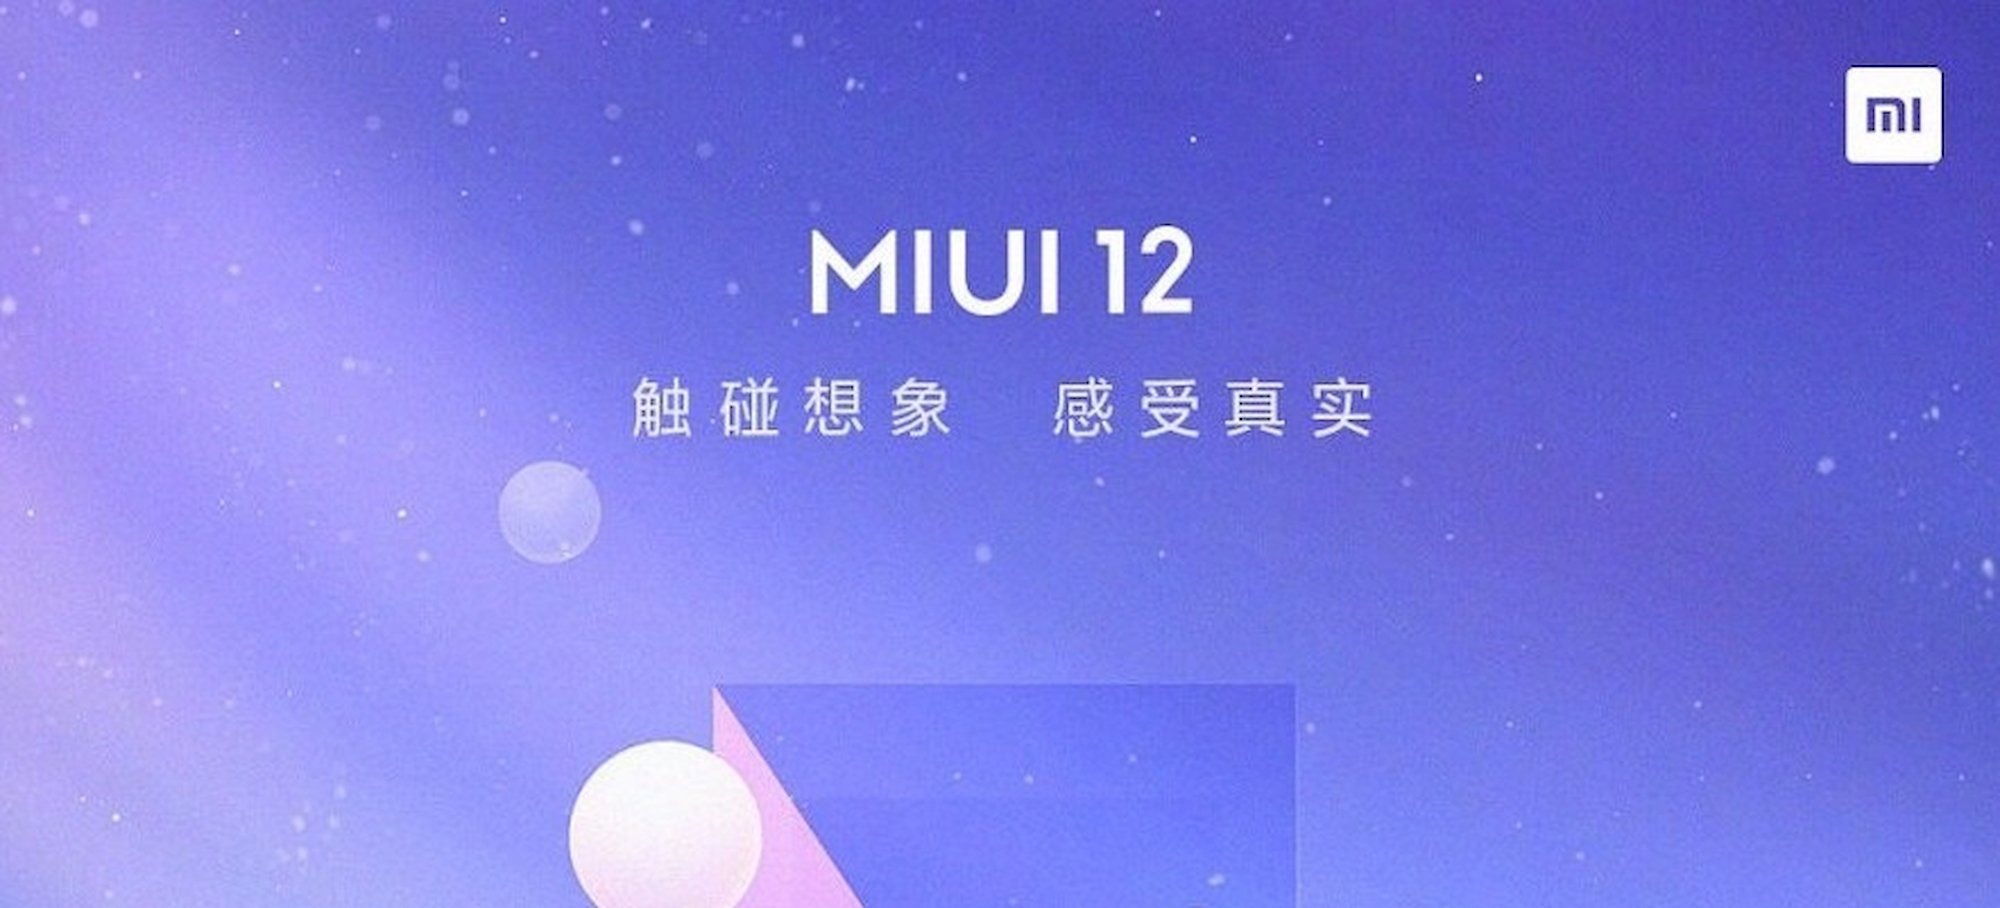 MIUI 12: قائمة الأجهزة التي ستتلقى واجهة Xiaomi الجديدة 60